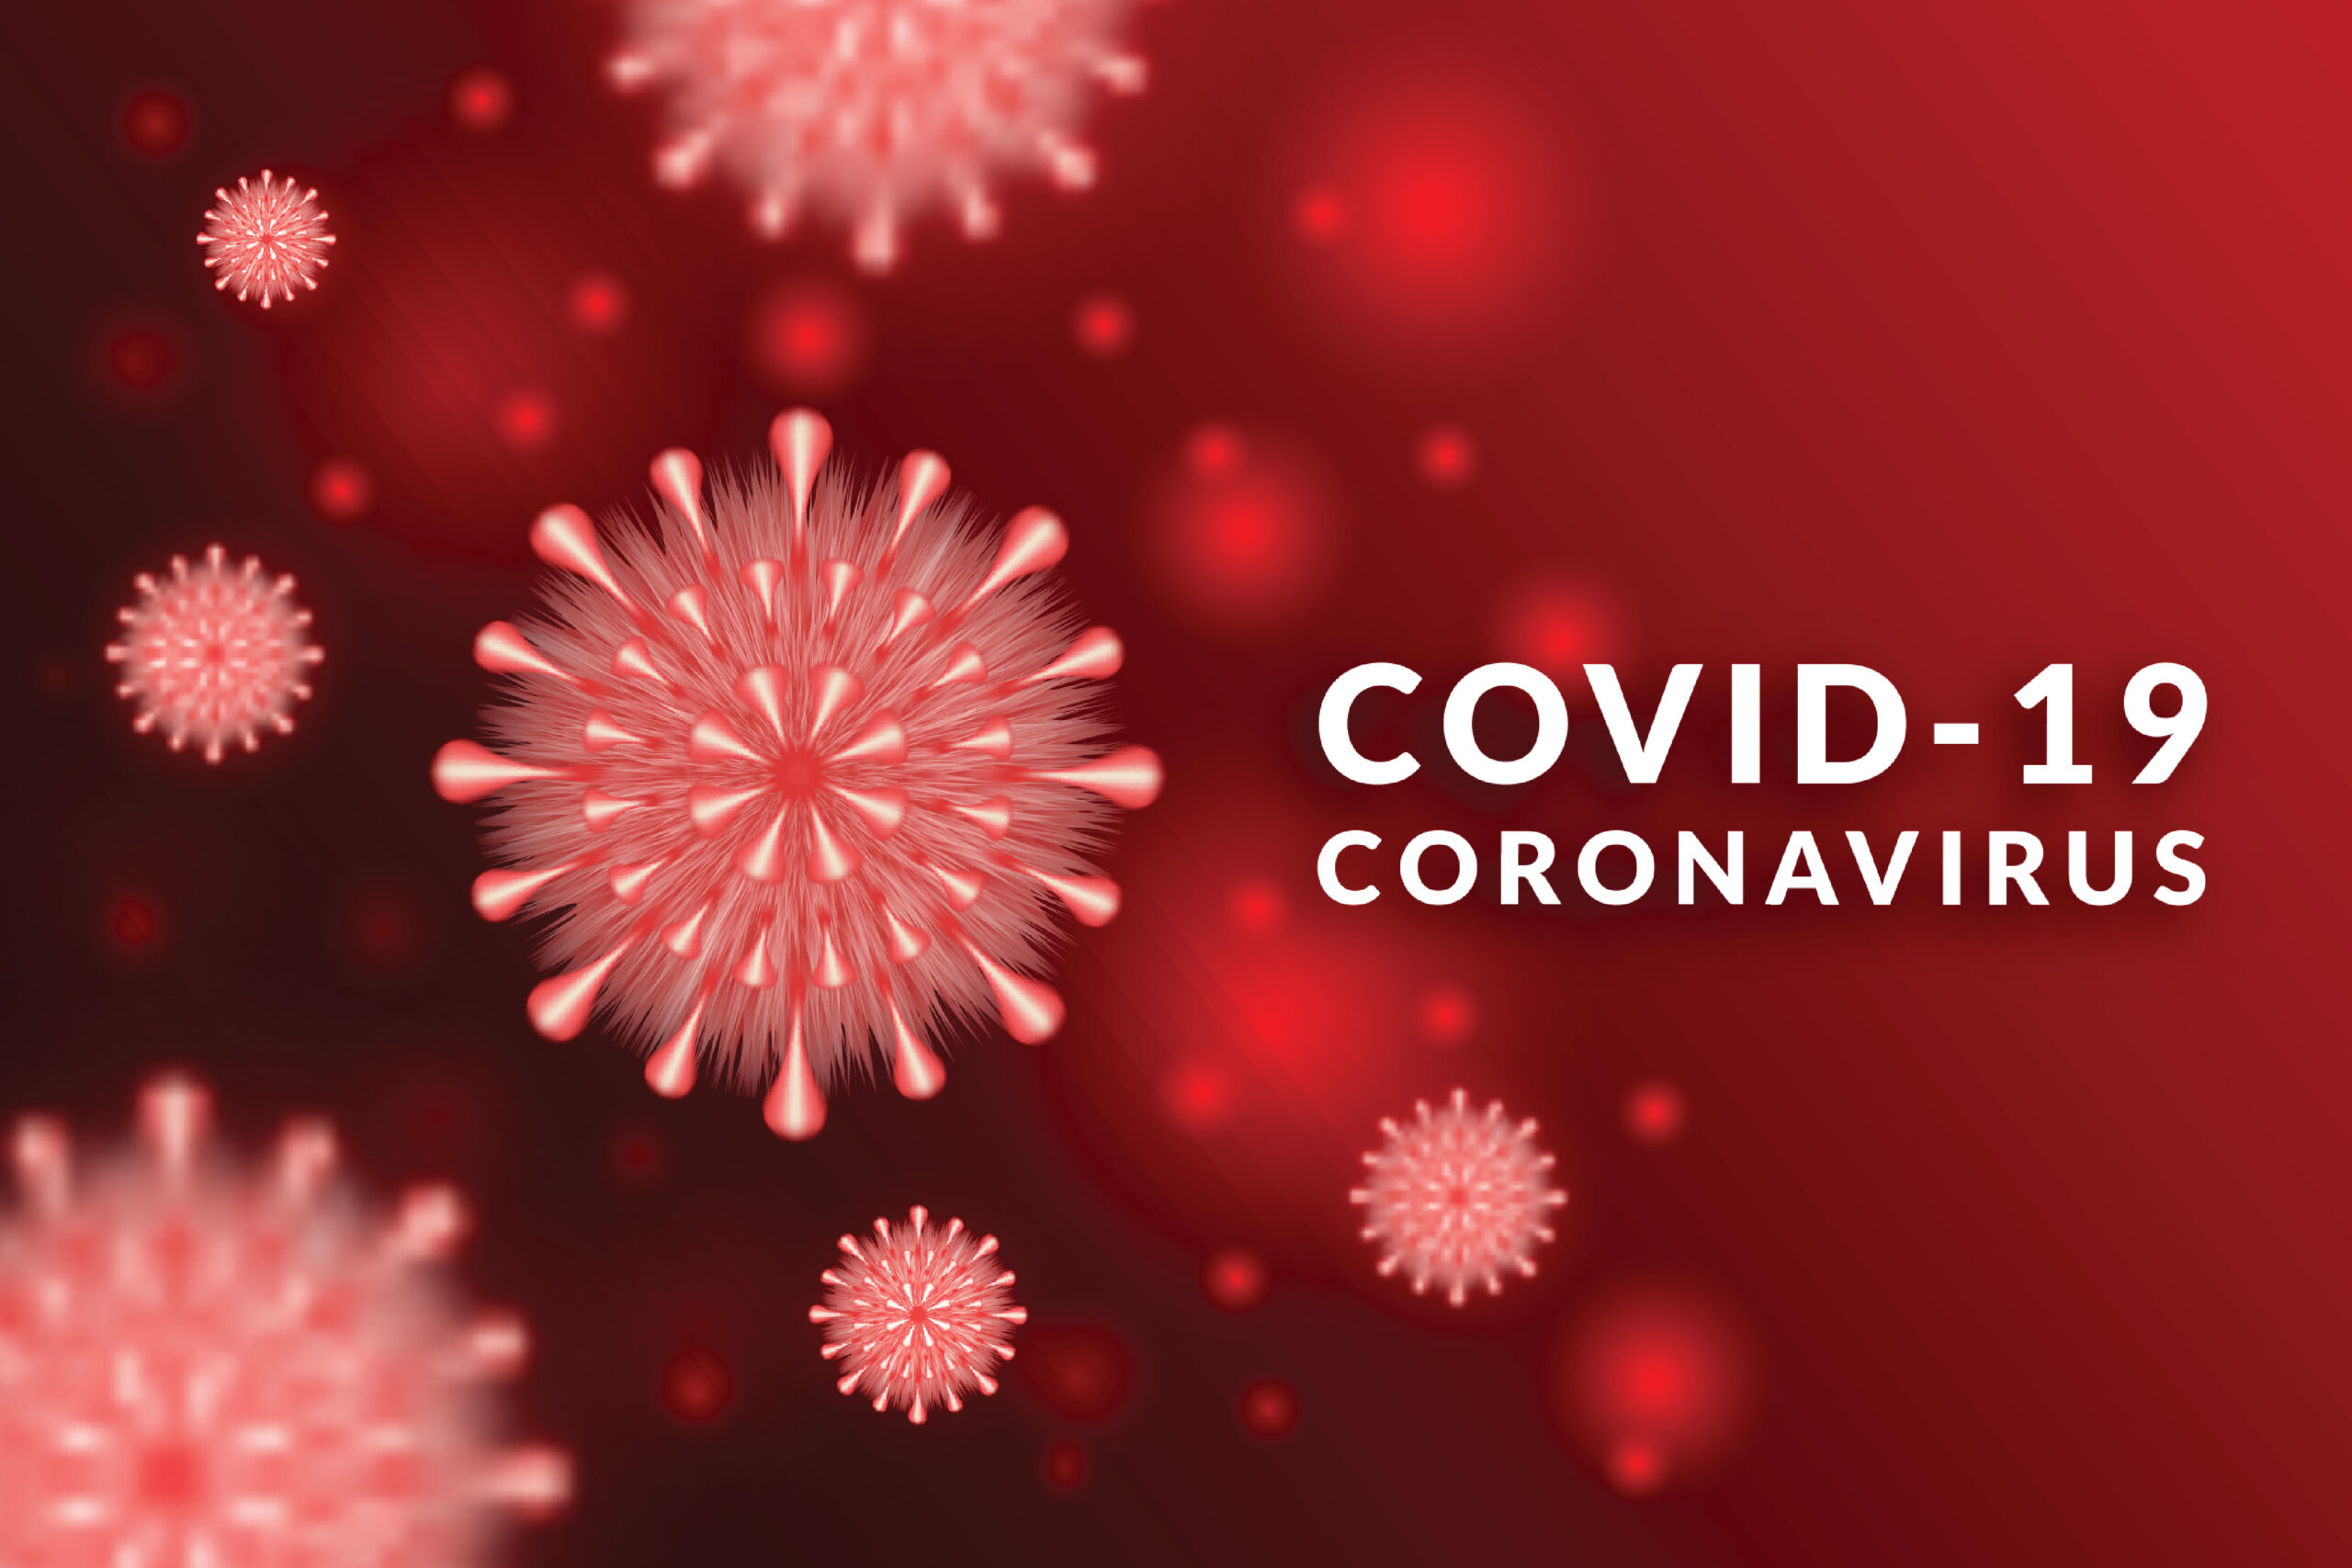 Covid-19 Coronavirus